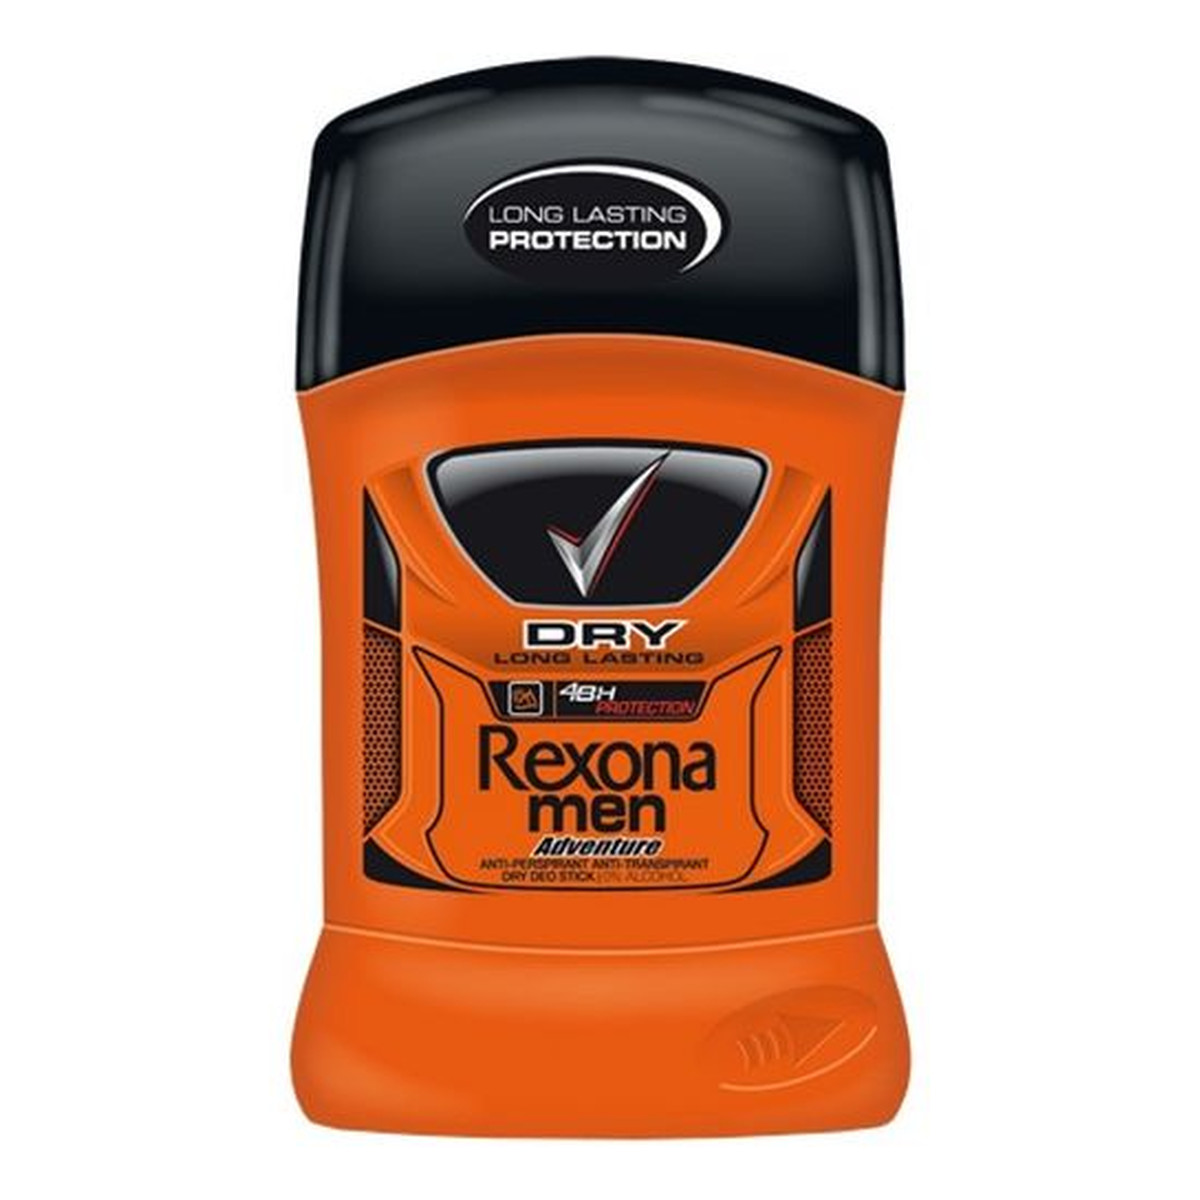 Rexona Adventure Dezodorant Sztyft 50ml